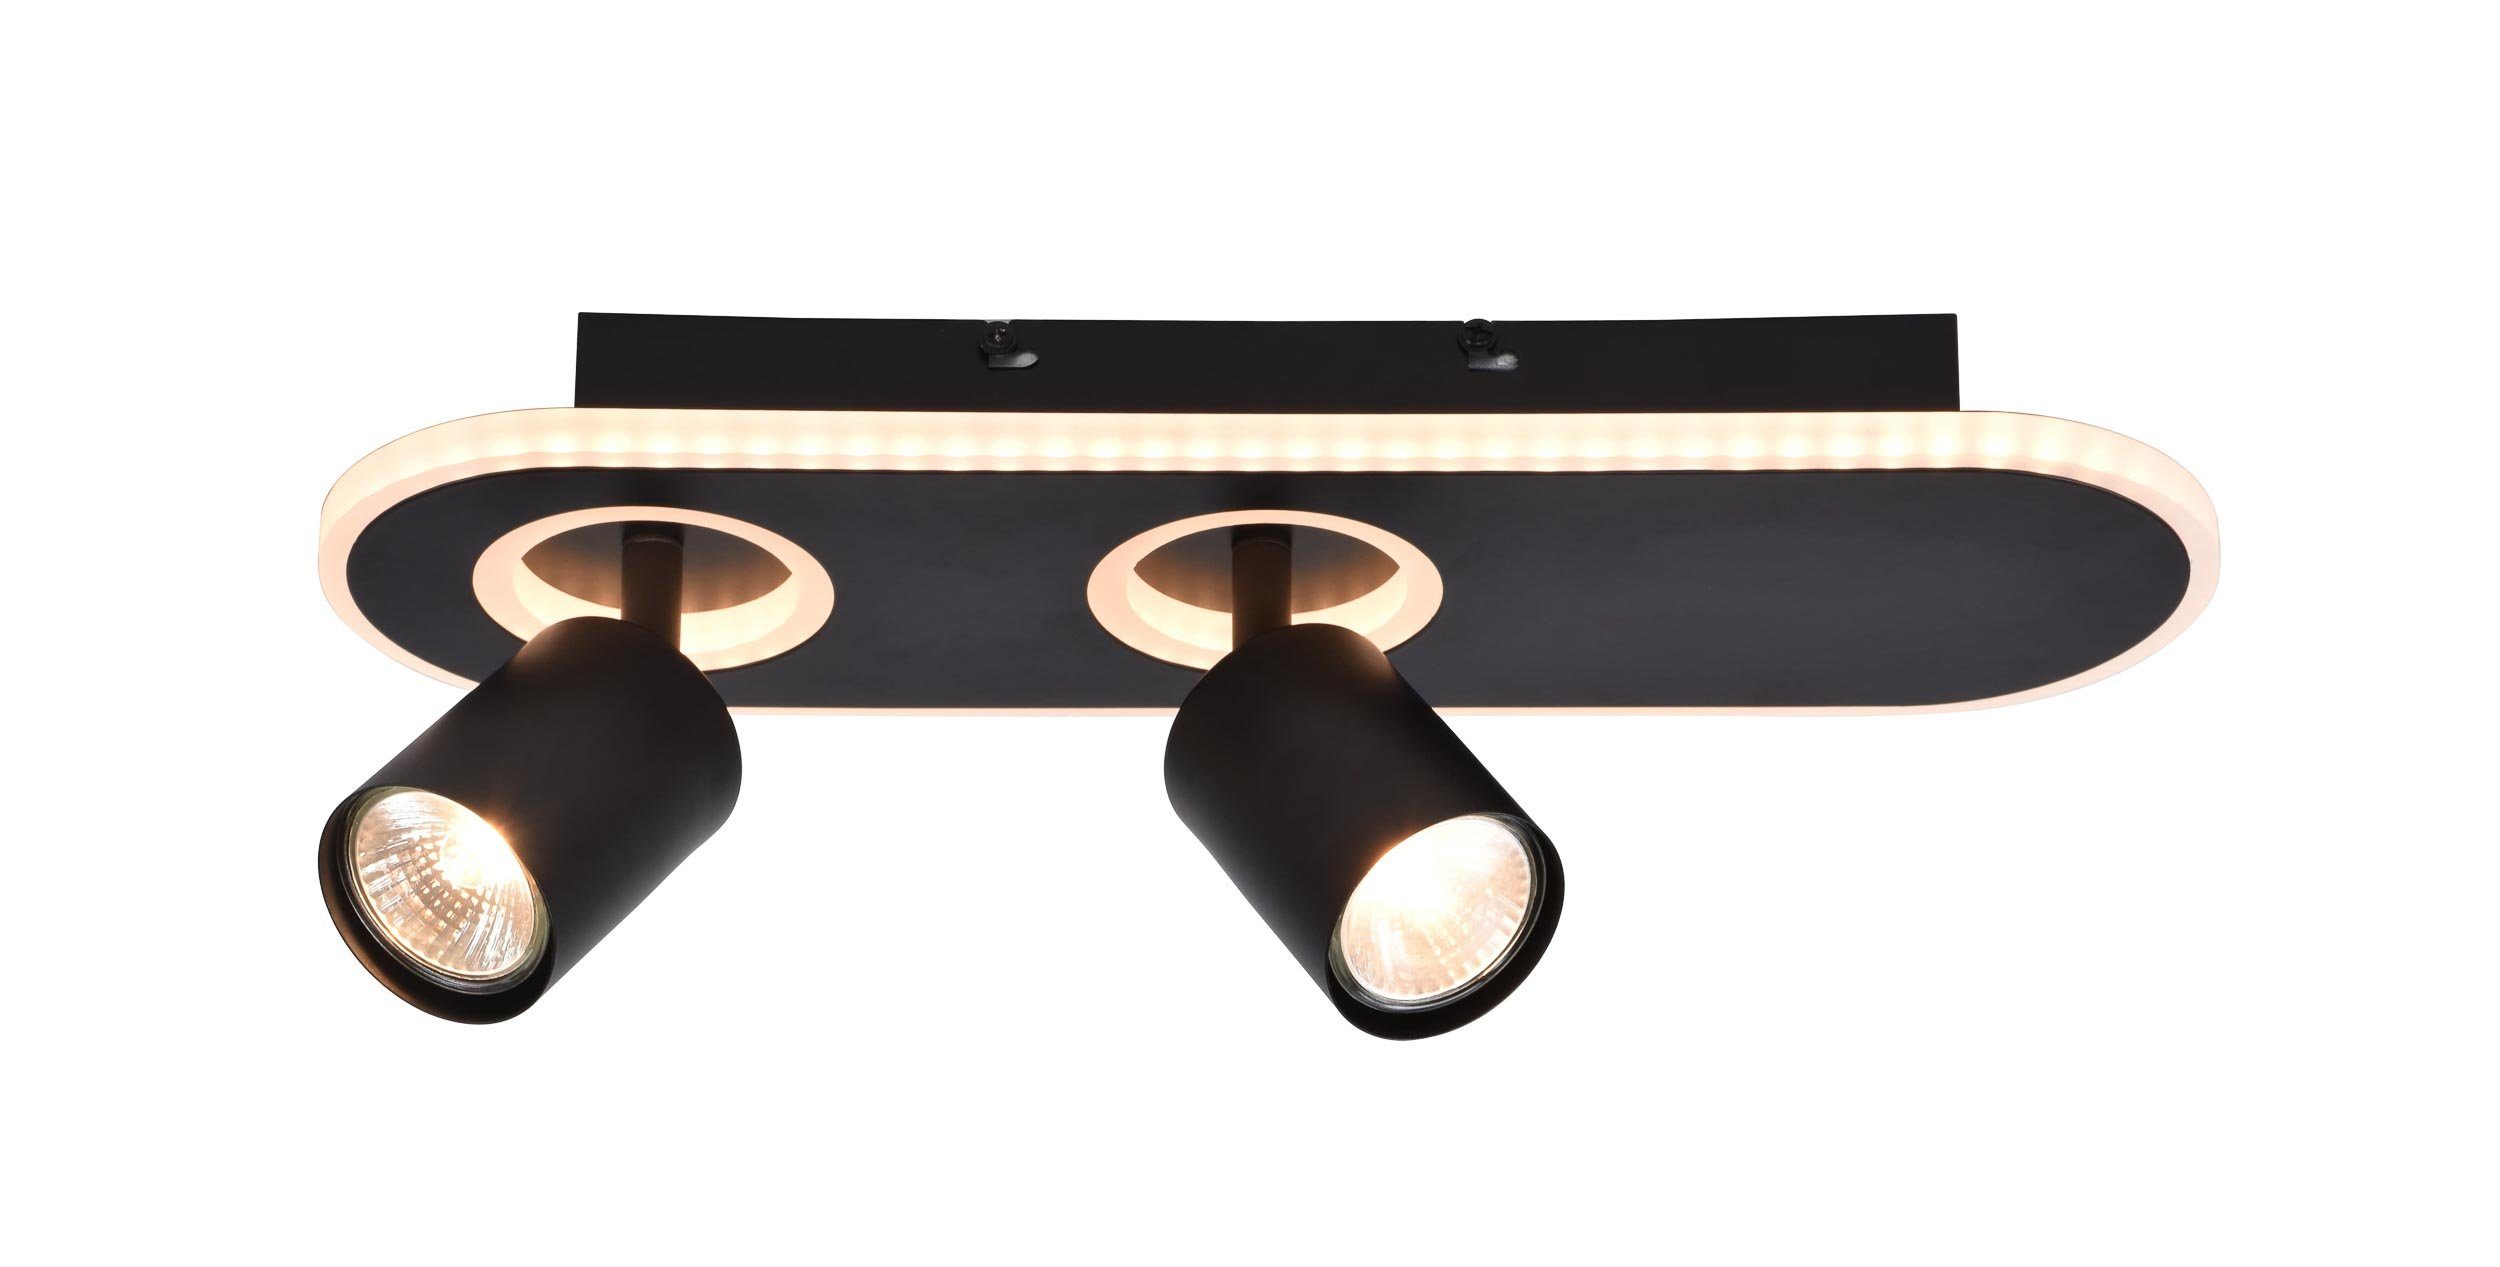 2x Deckenleuchte Kimon PAR51, Spotbalken schwarz, LED Lampe, 2flg Brilliant Kimon, 5W geeignet GU10,